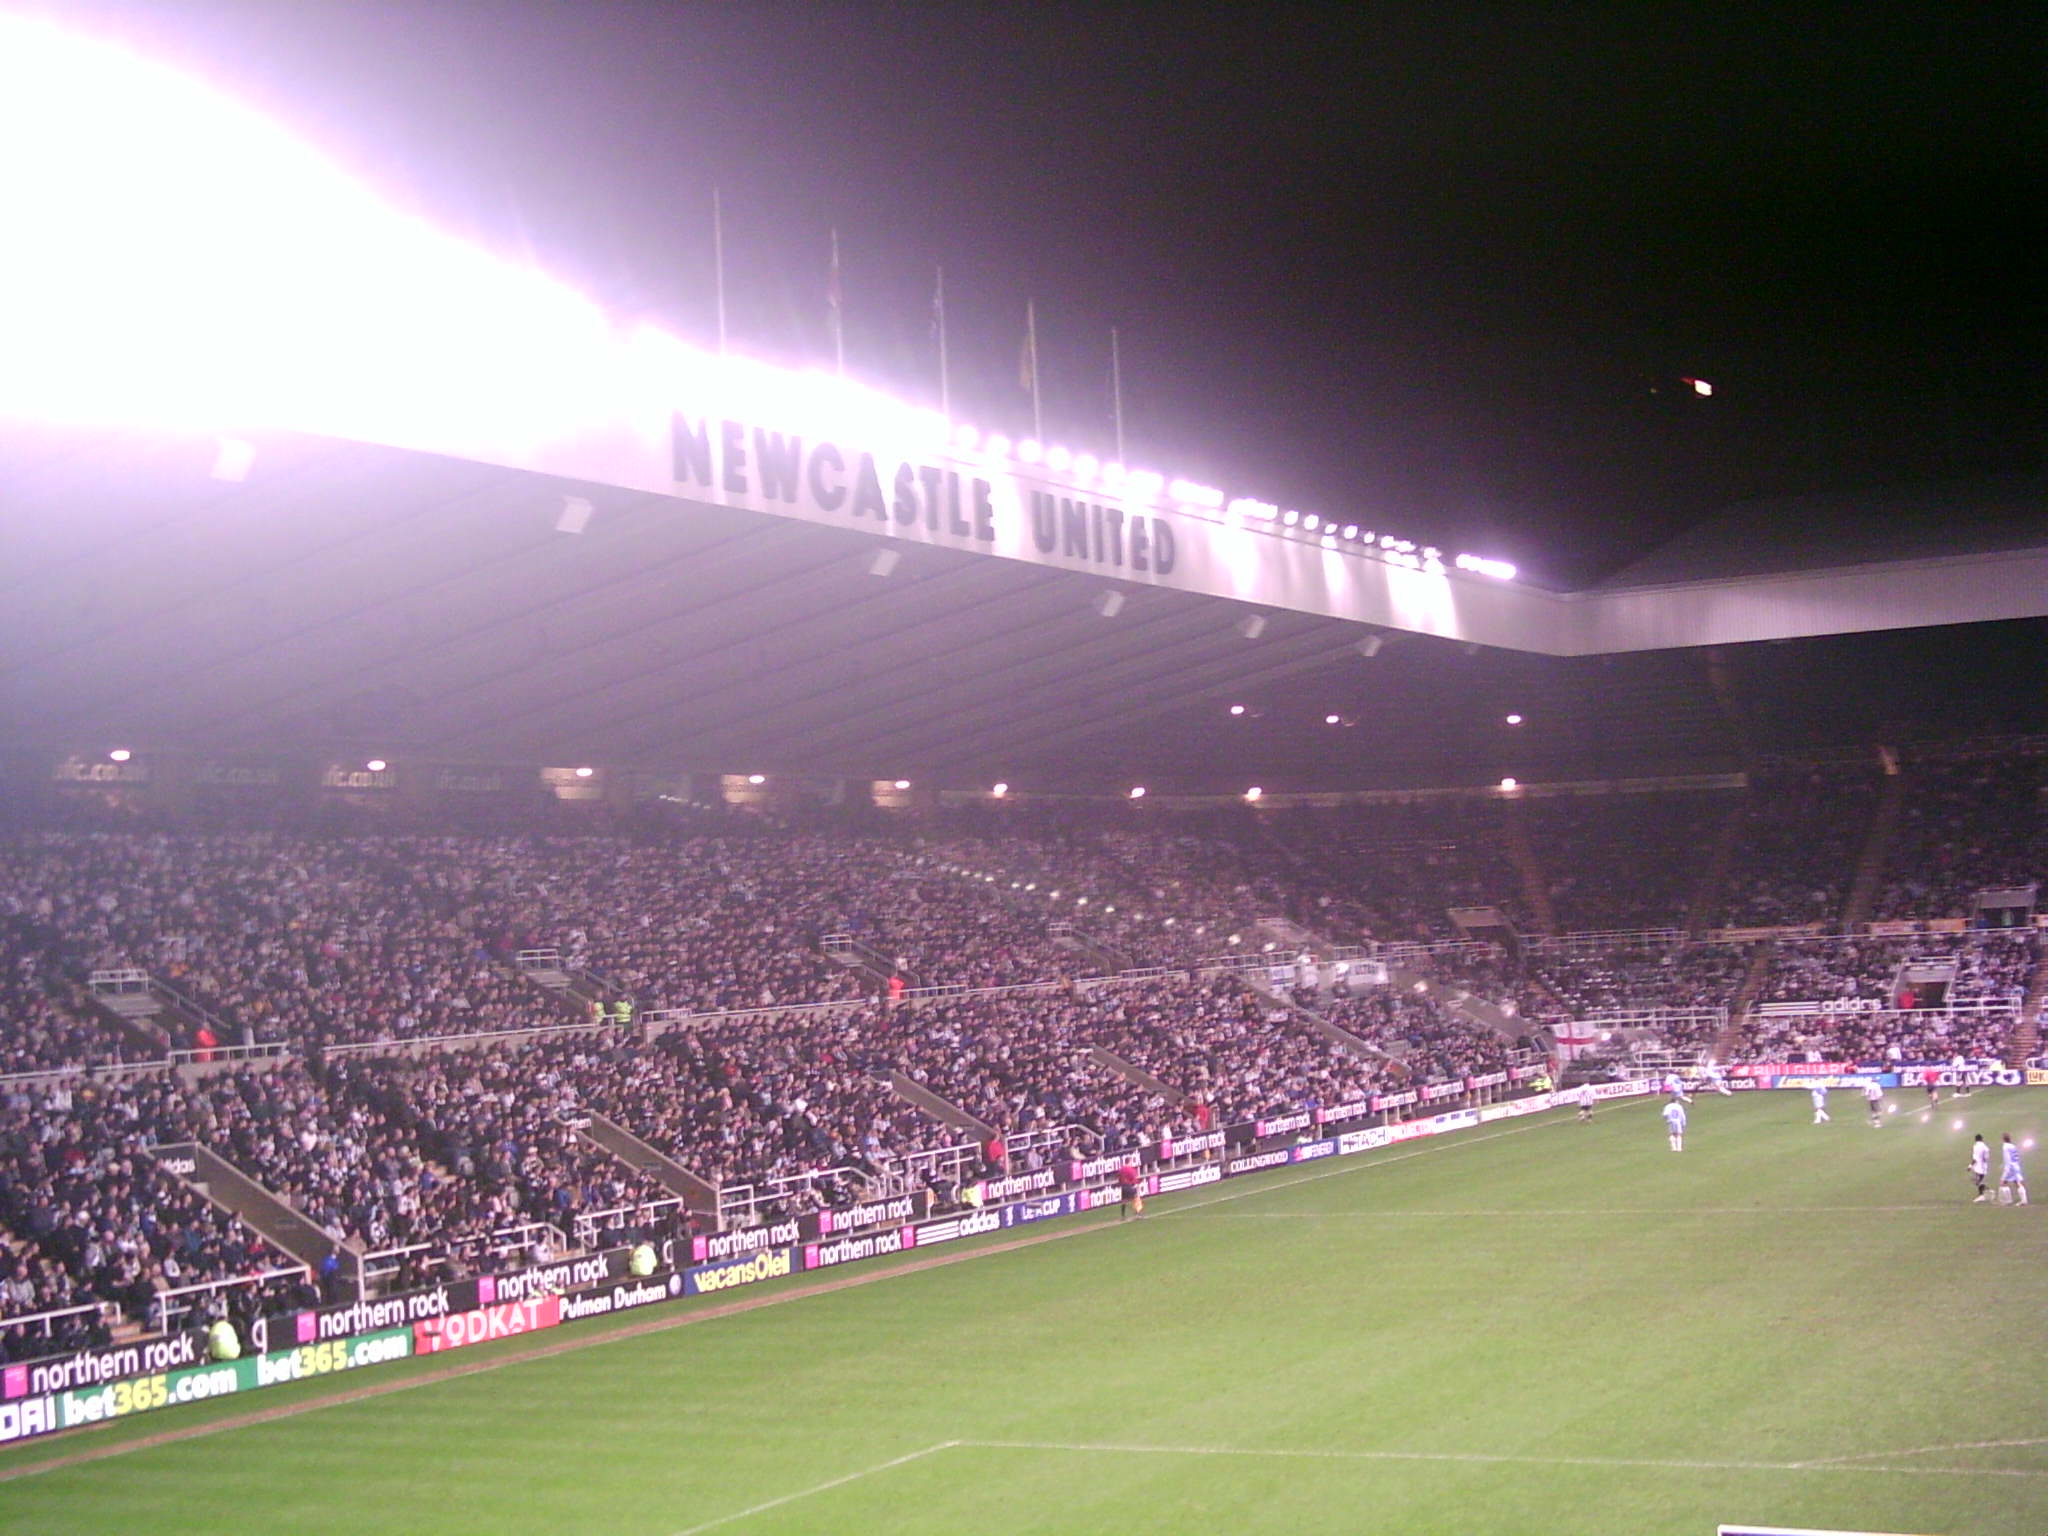 Newcastle_United_v_Zulte_Waragem,_2007_(2)-1